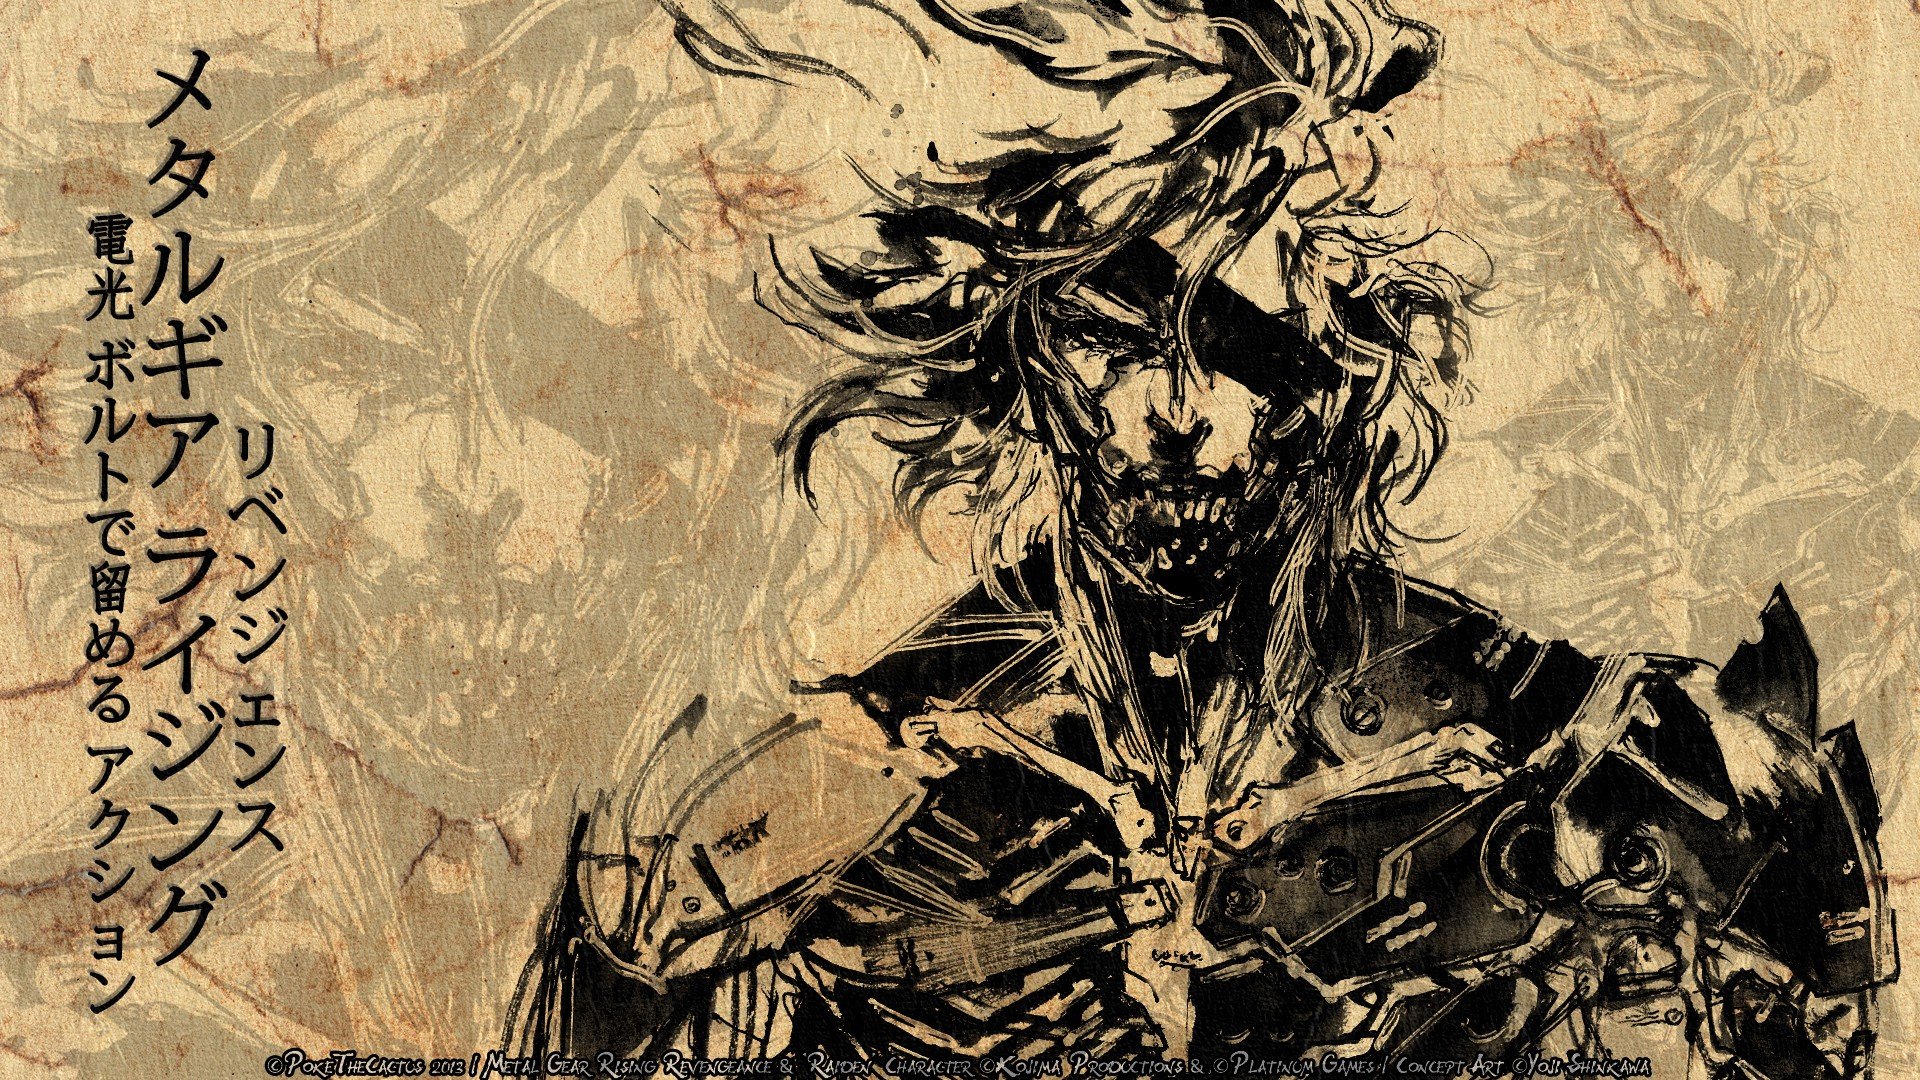 Metal Gear Rising Revengeance Hd Wallpaper Background Image 19x1080